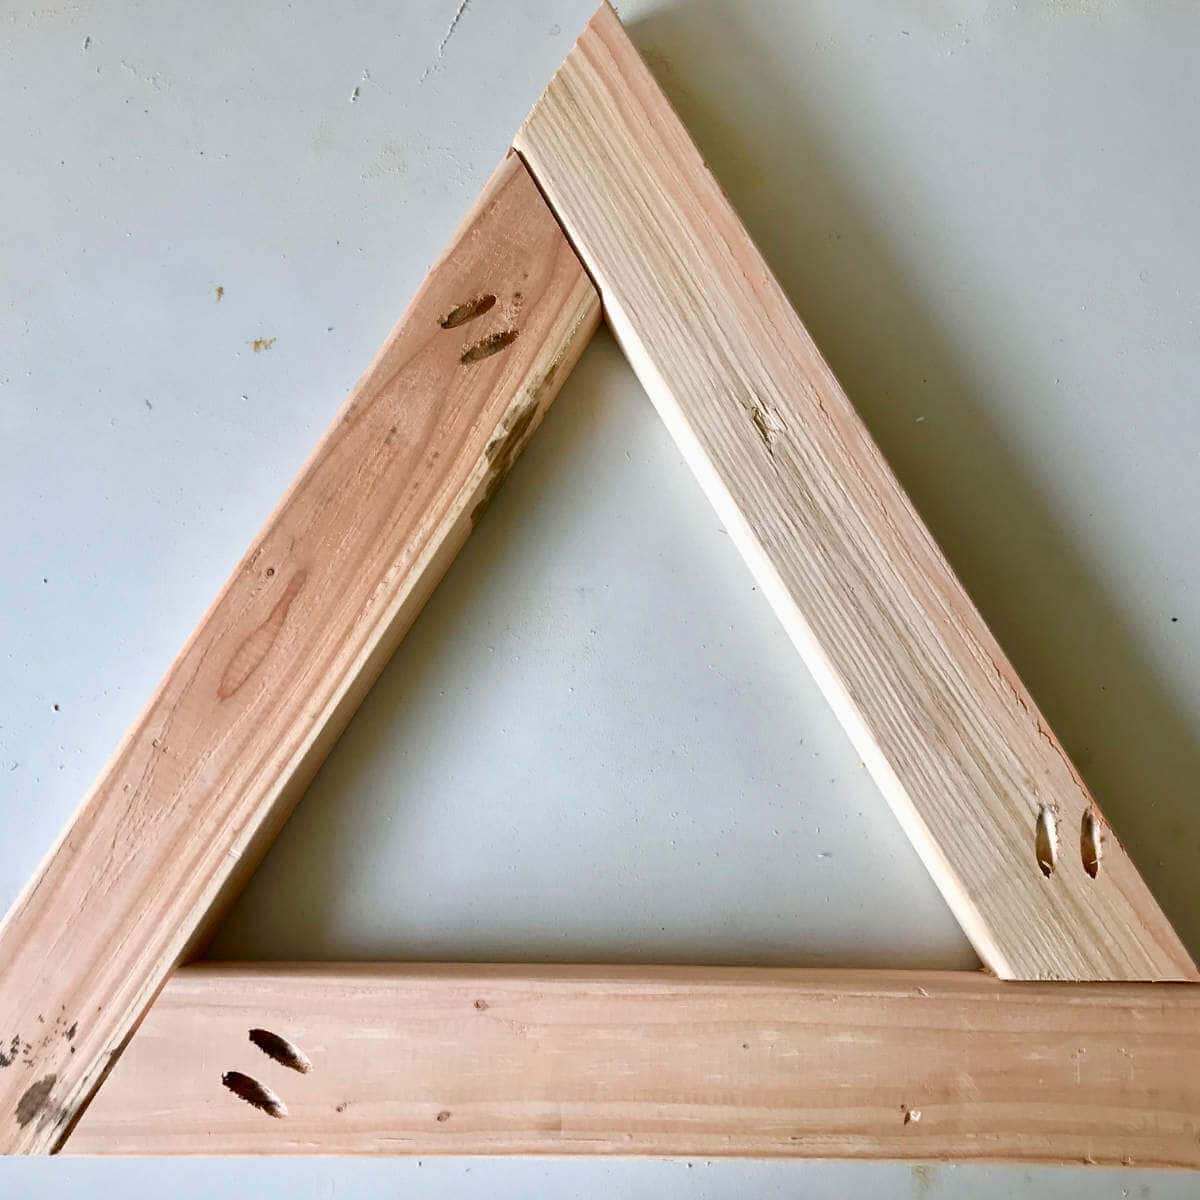 Triangle shaped wood leg for a photo backdrop wall.